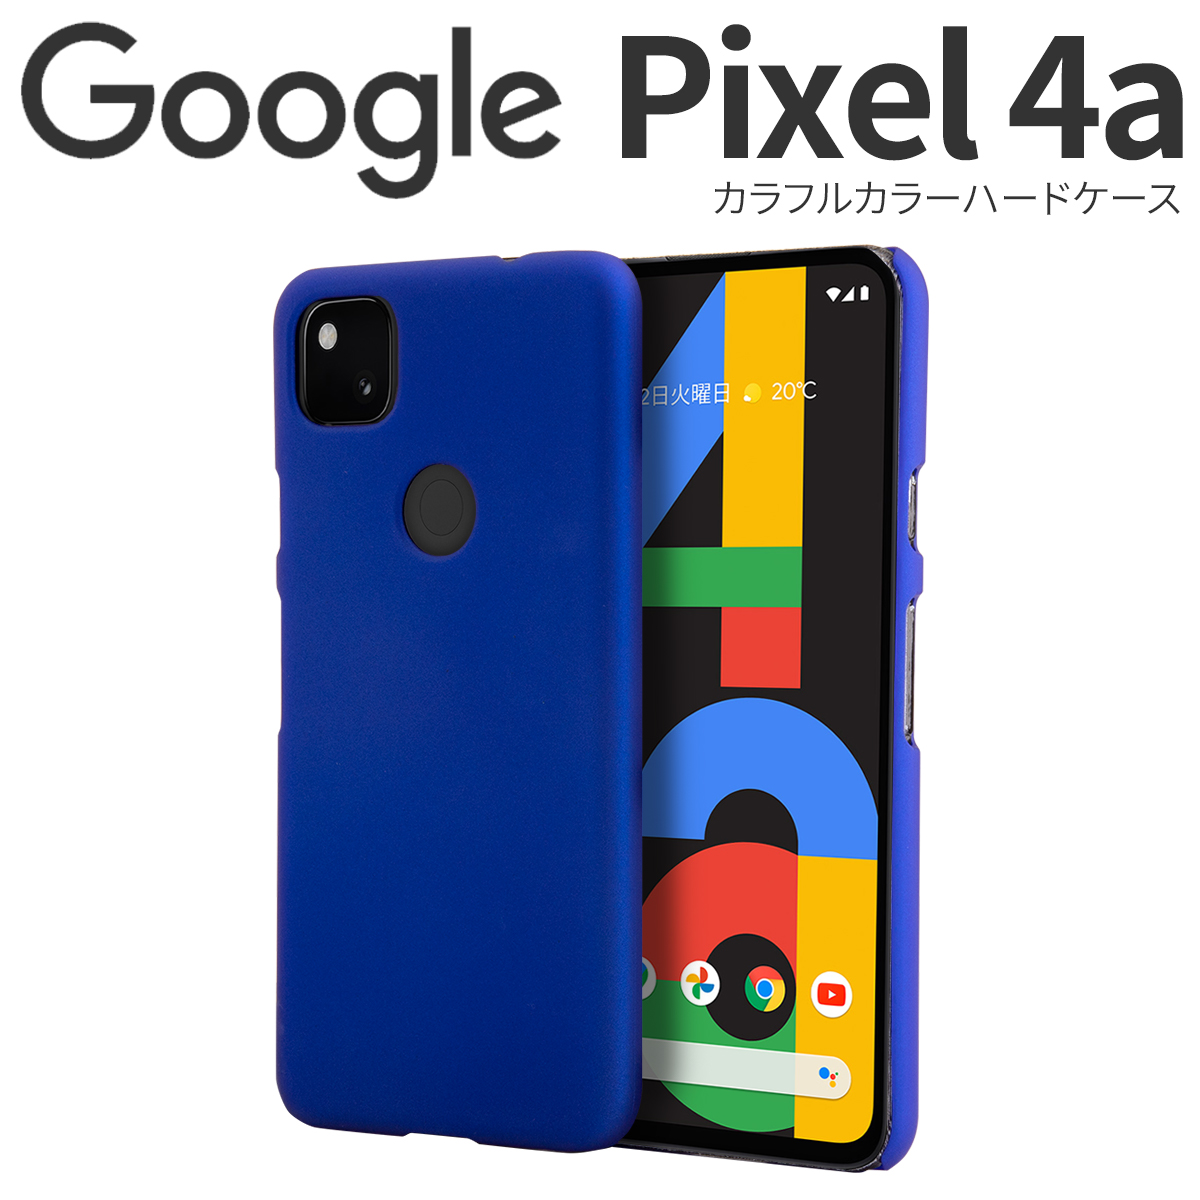 Google Pixel 4a カラフルカラーハードケース